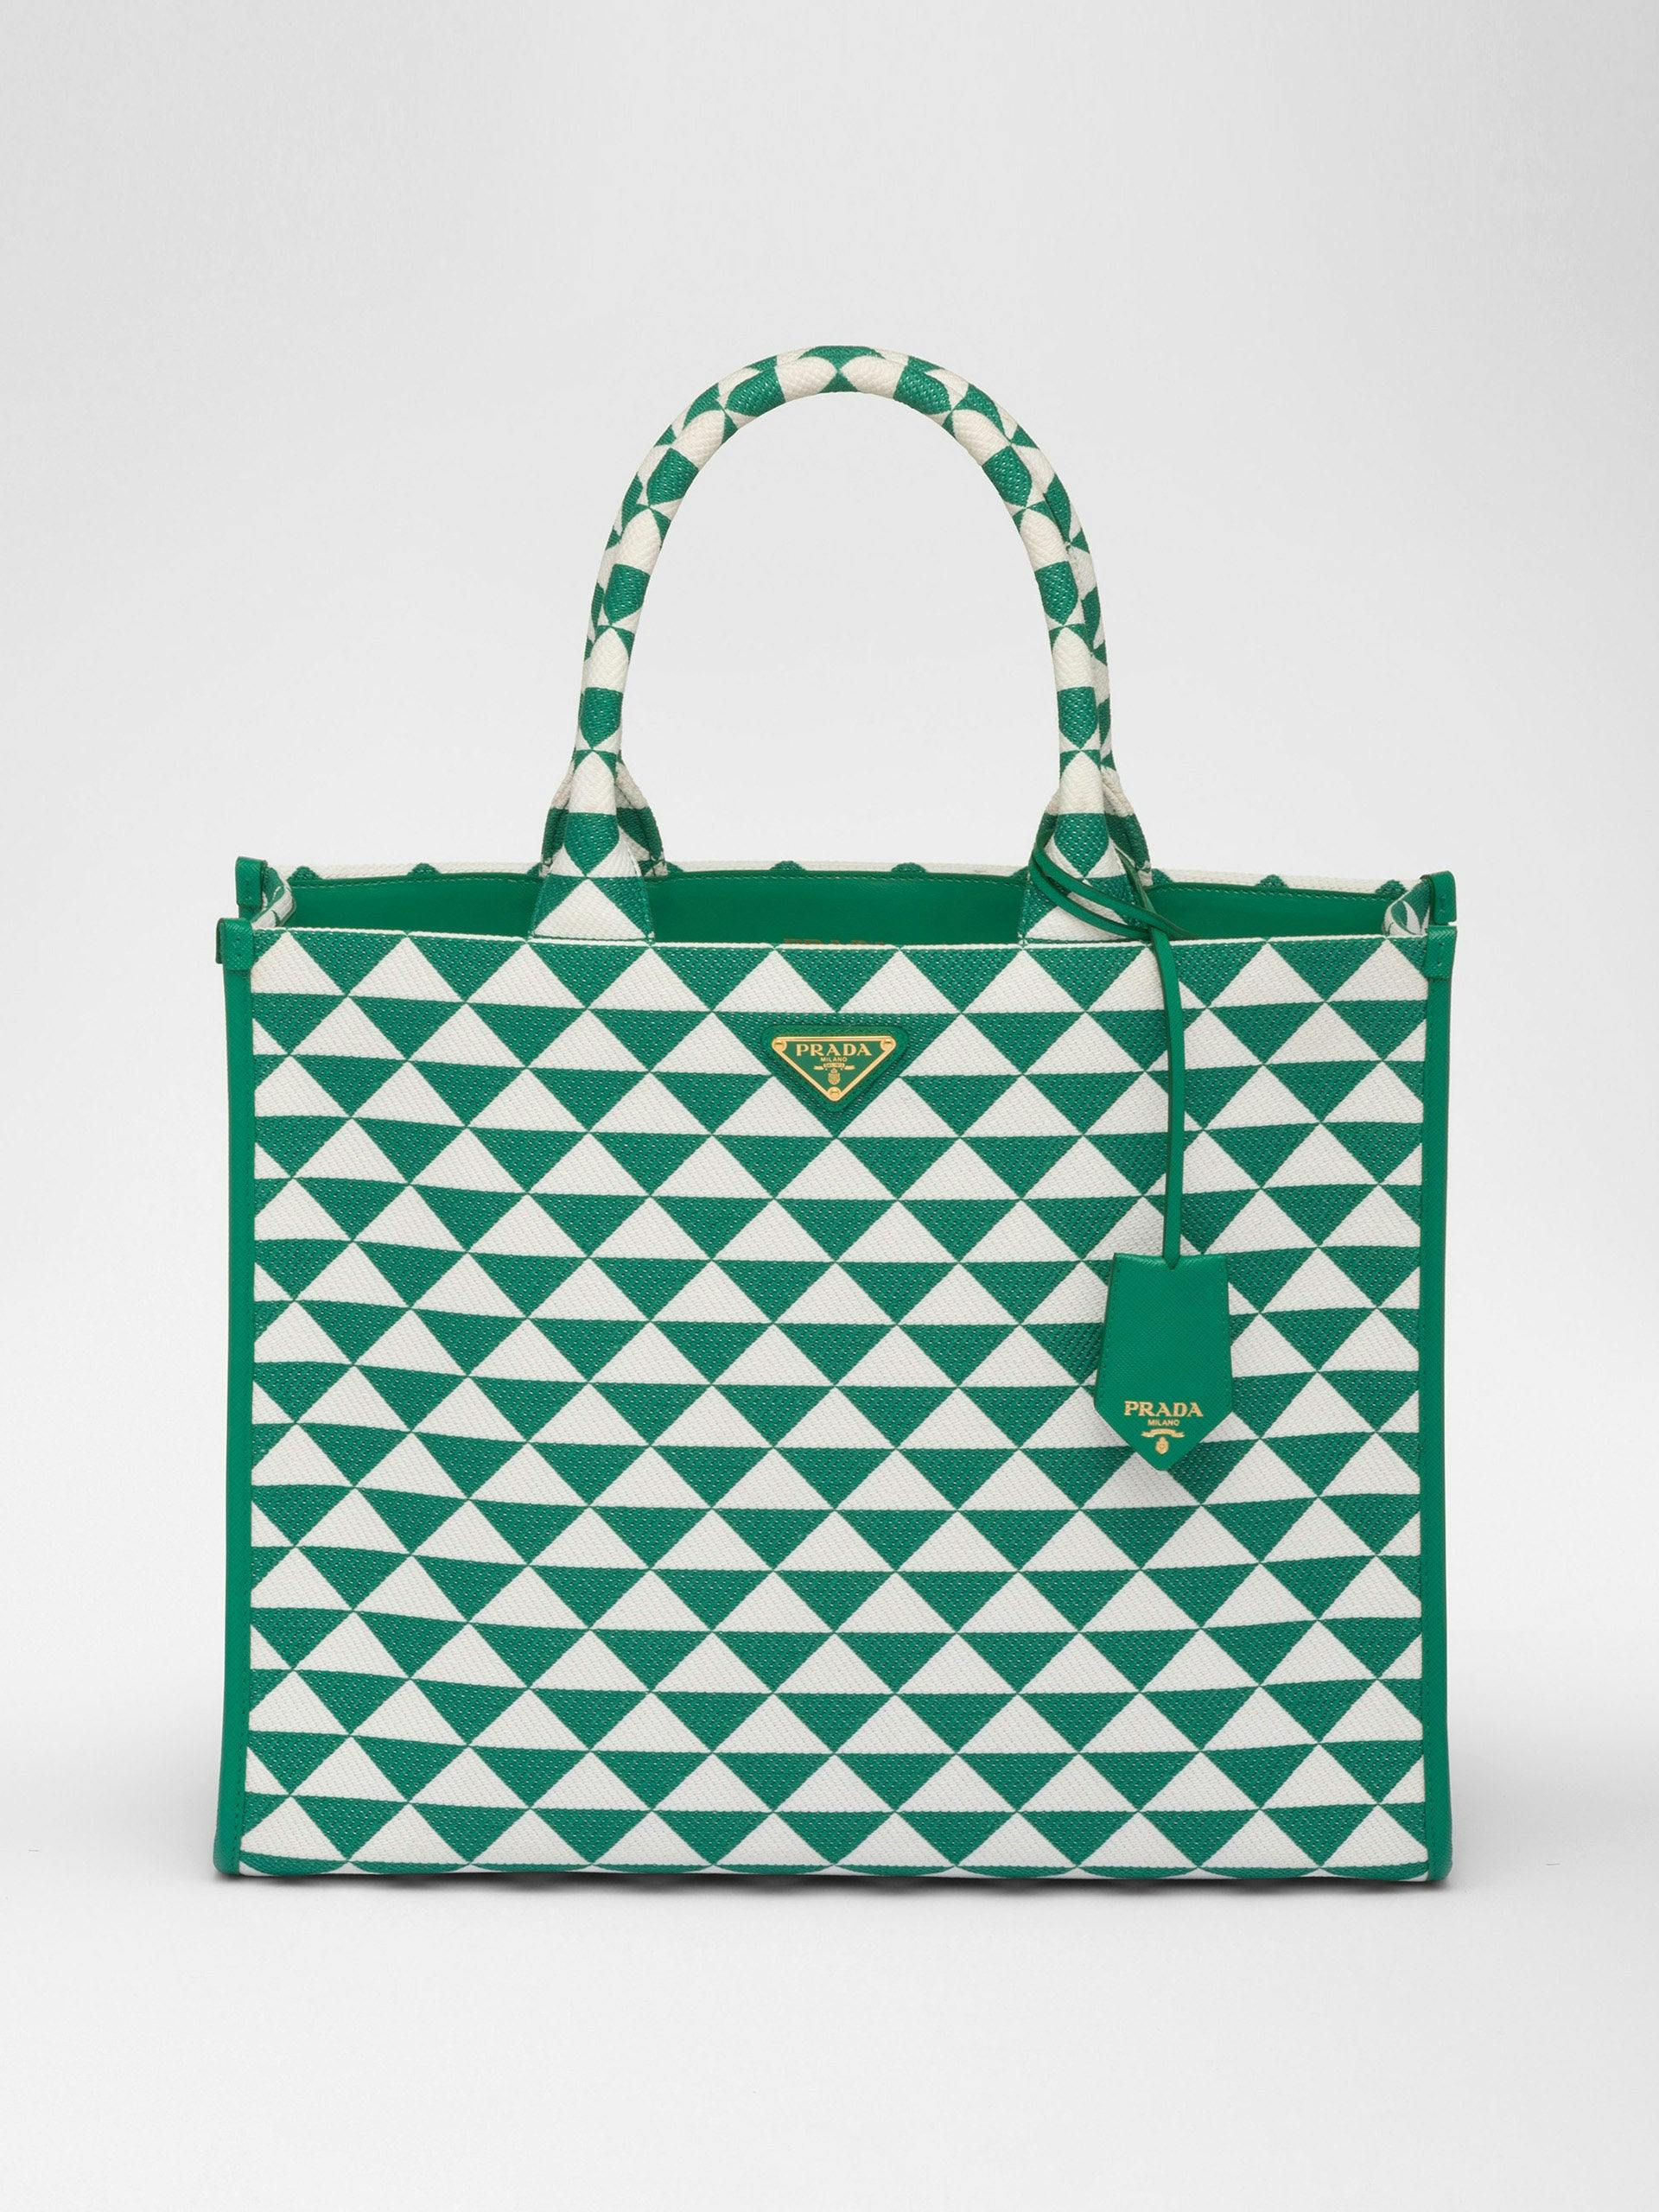 Green and white embroidered fabric handbag